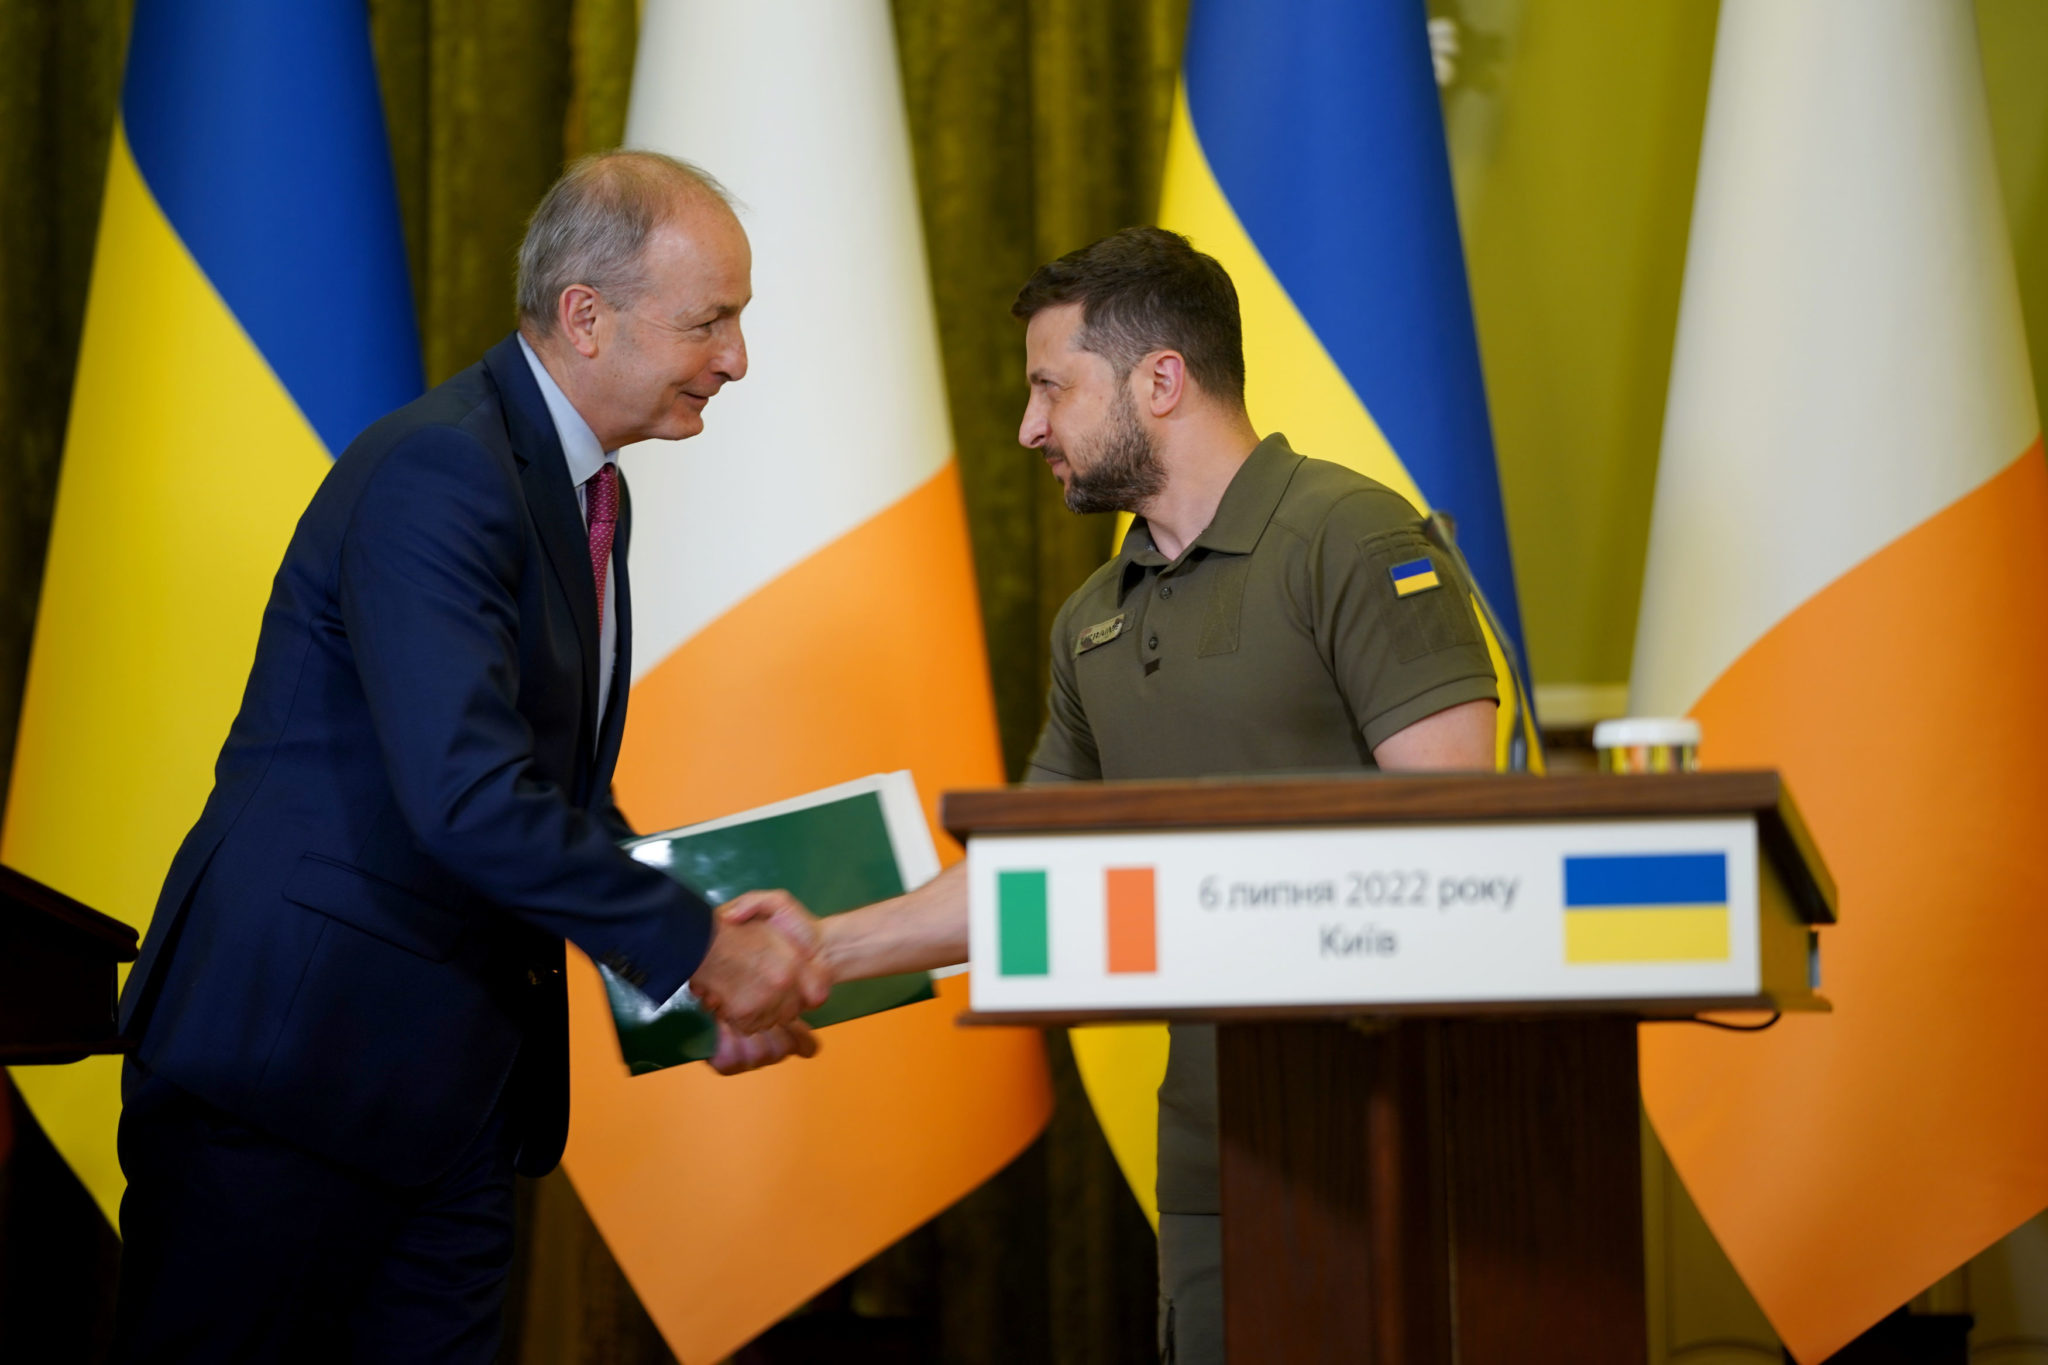 Ukrainian President Volodymyr Zelenskyy greets then-Taoiseach Micheál Martin